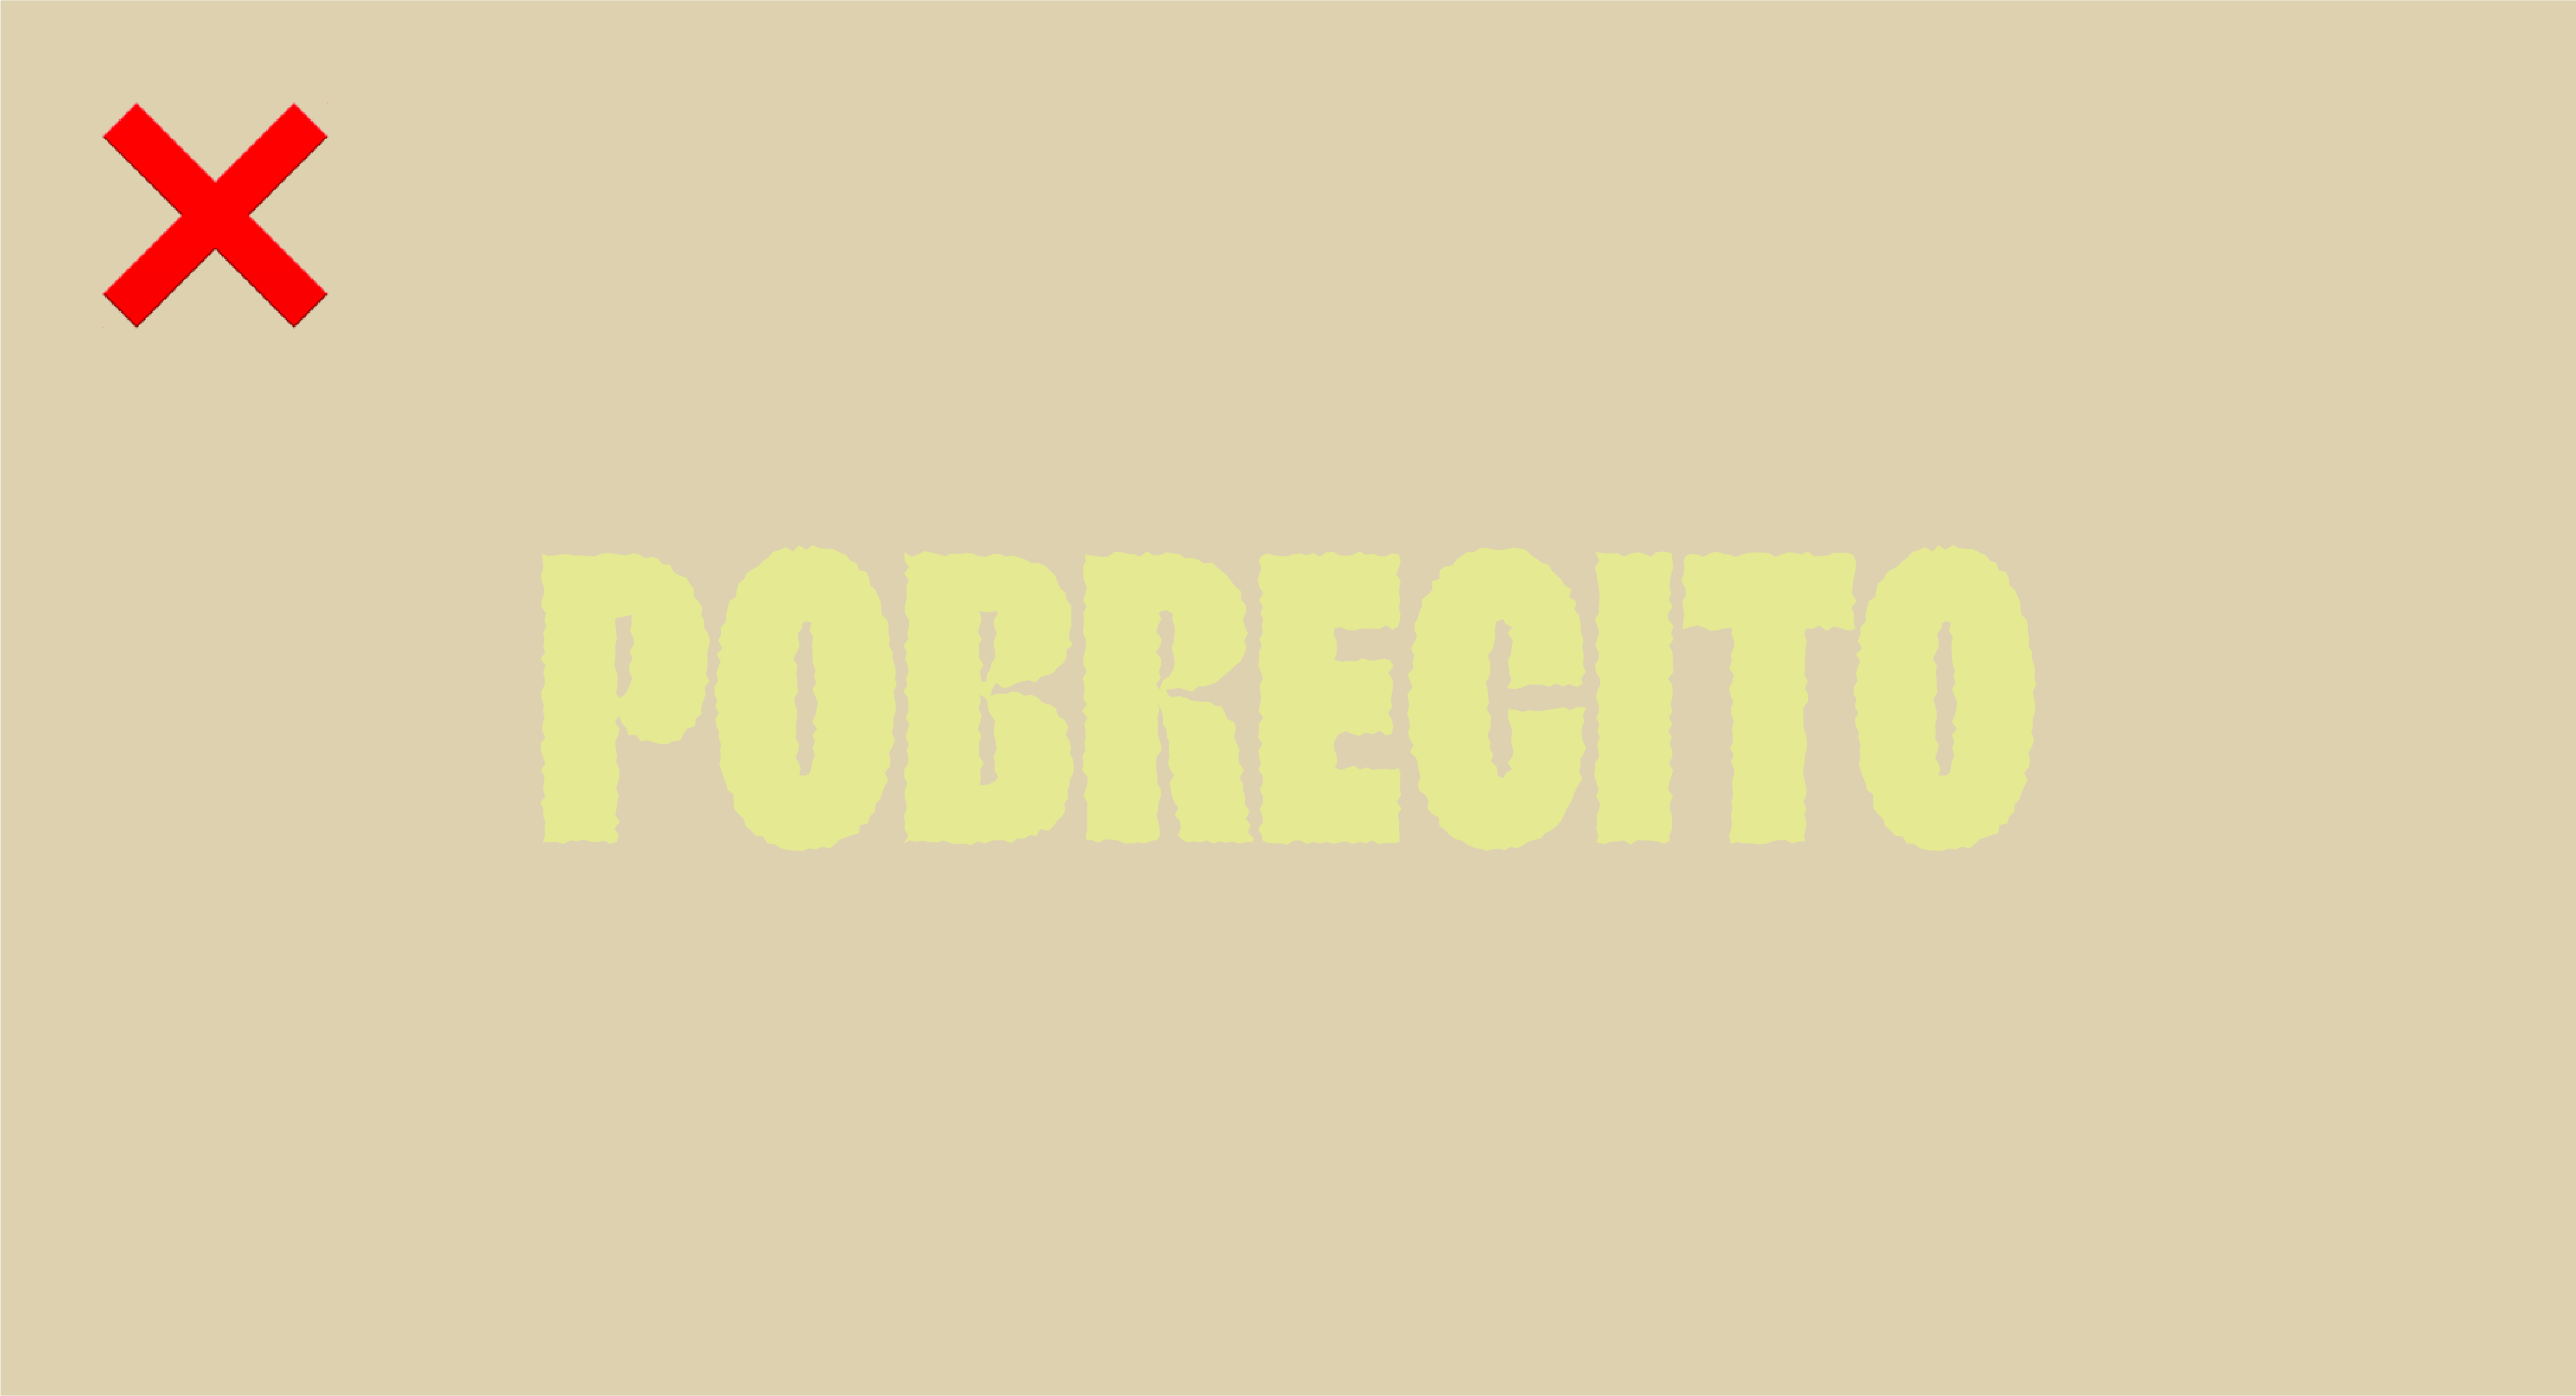 Pobrecito_Color 2.png